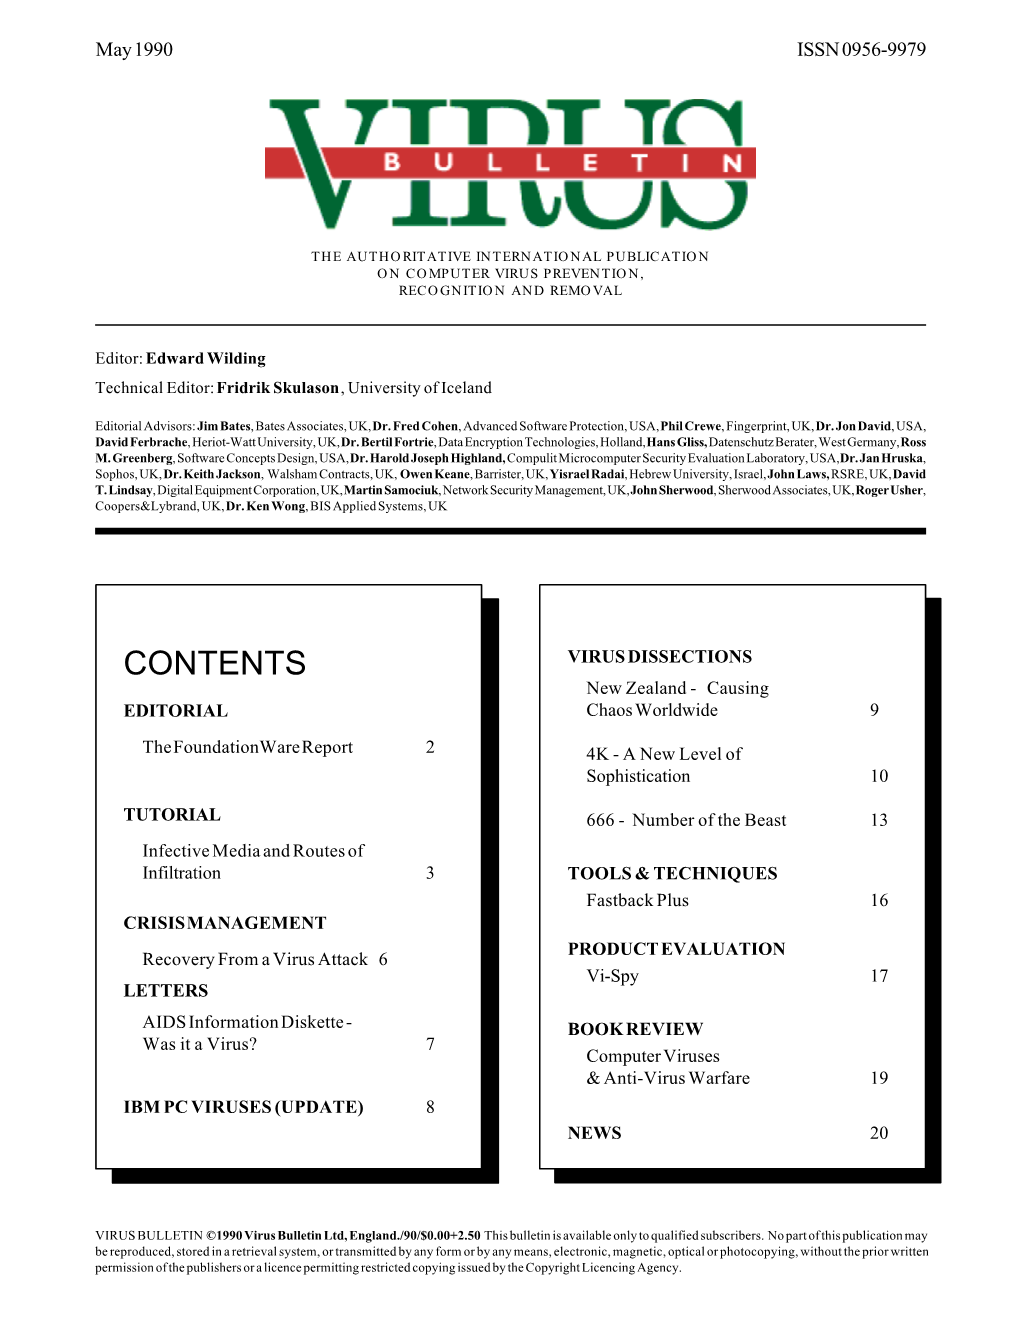 Virus Bulletin, May 1990